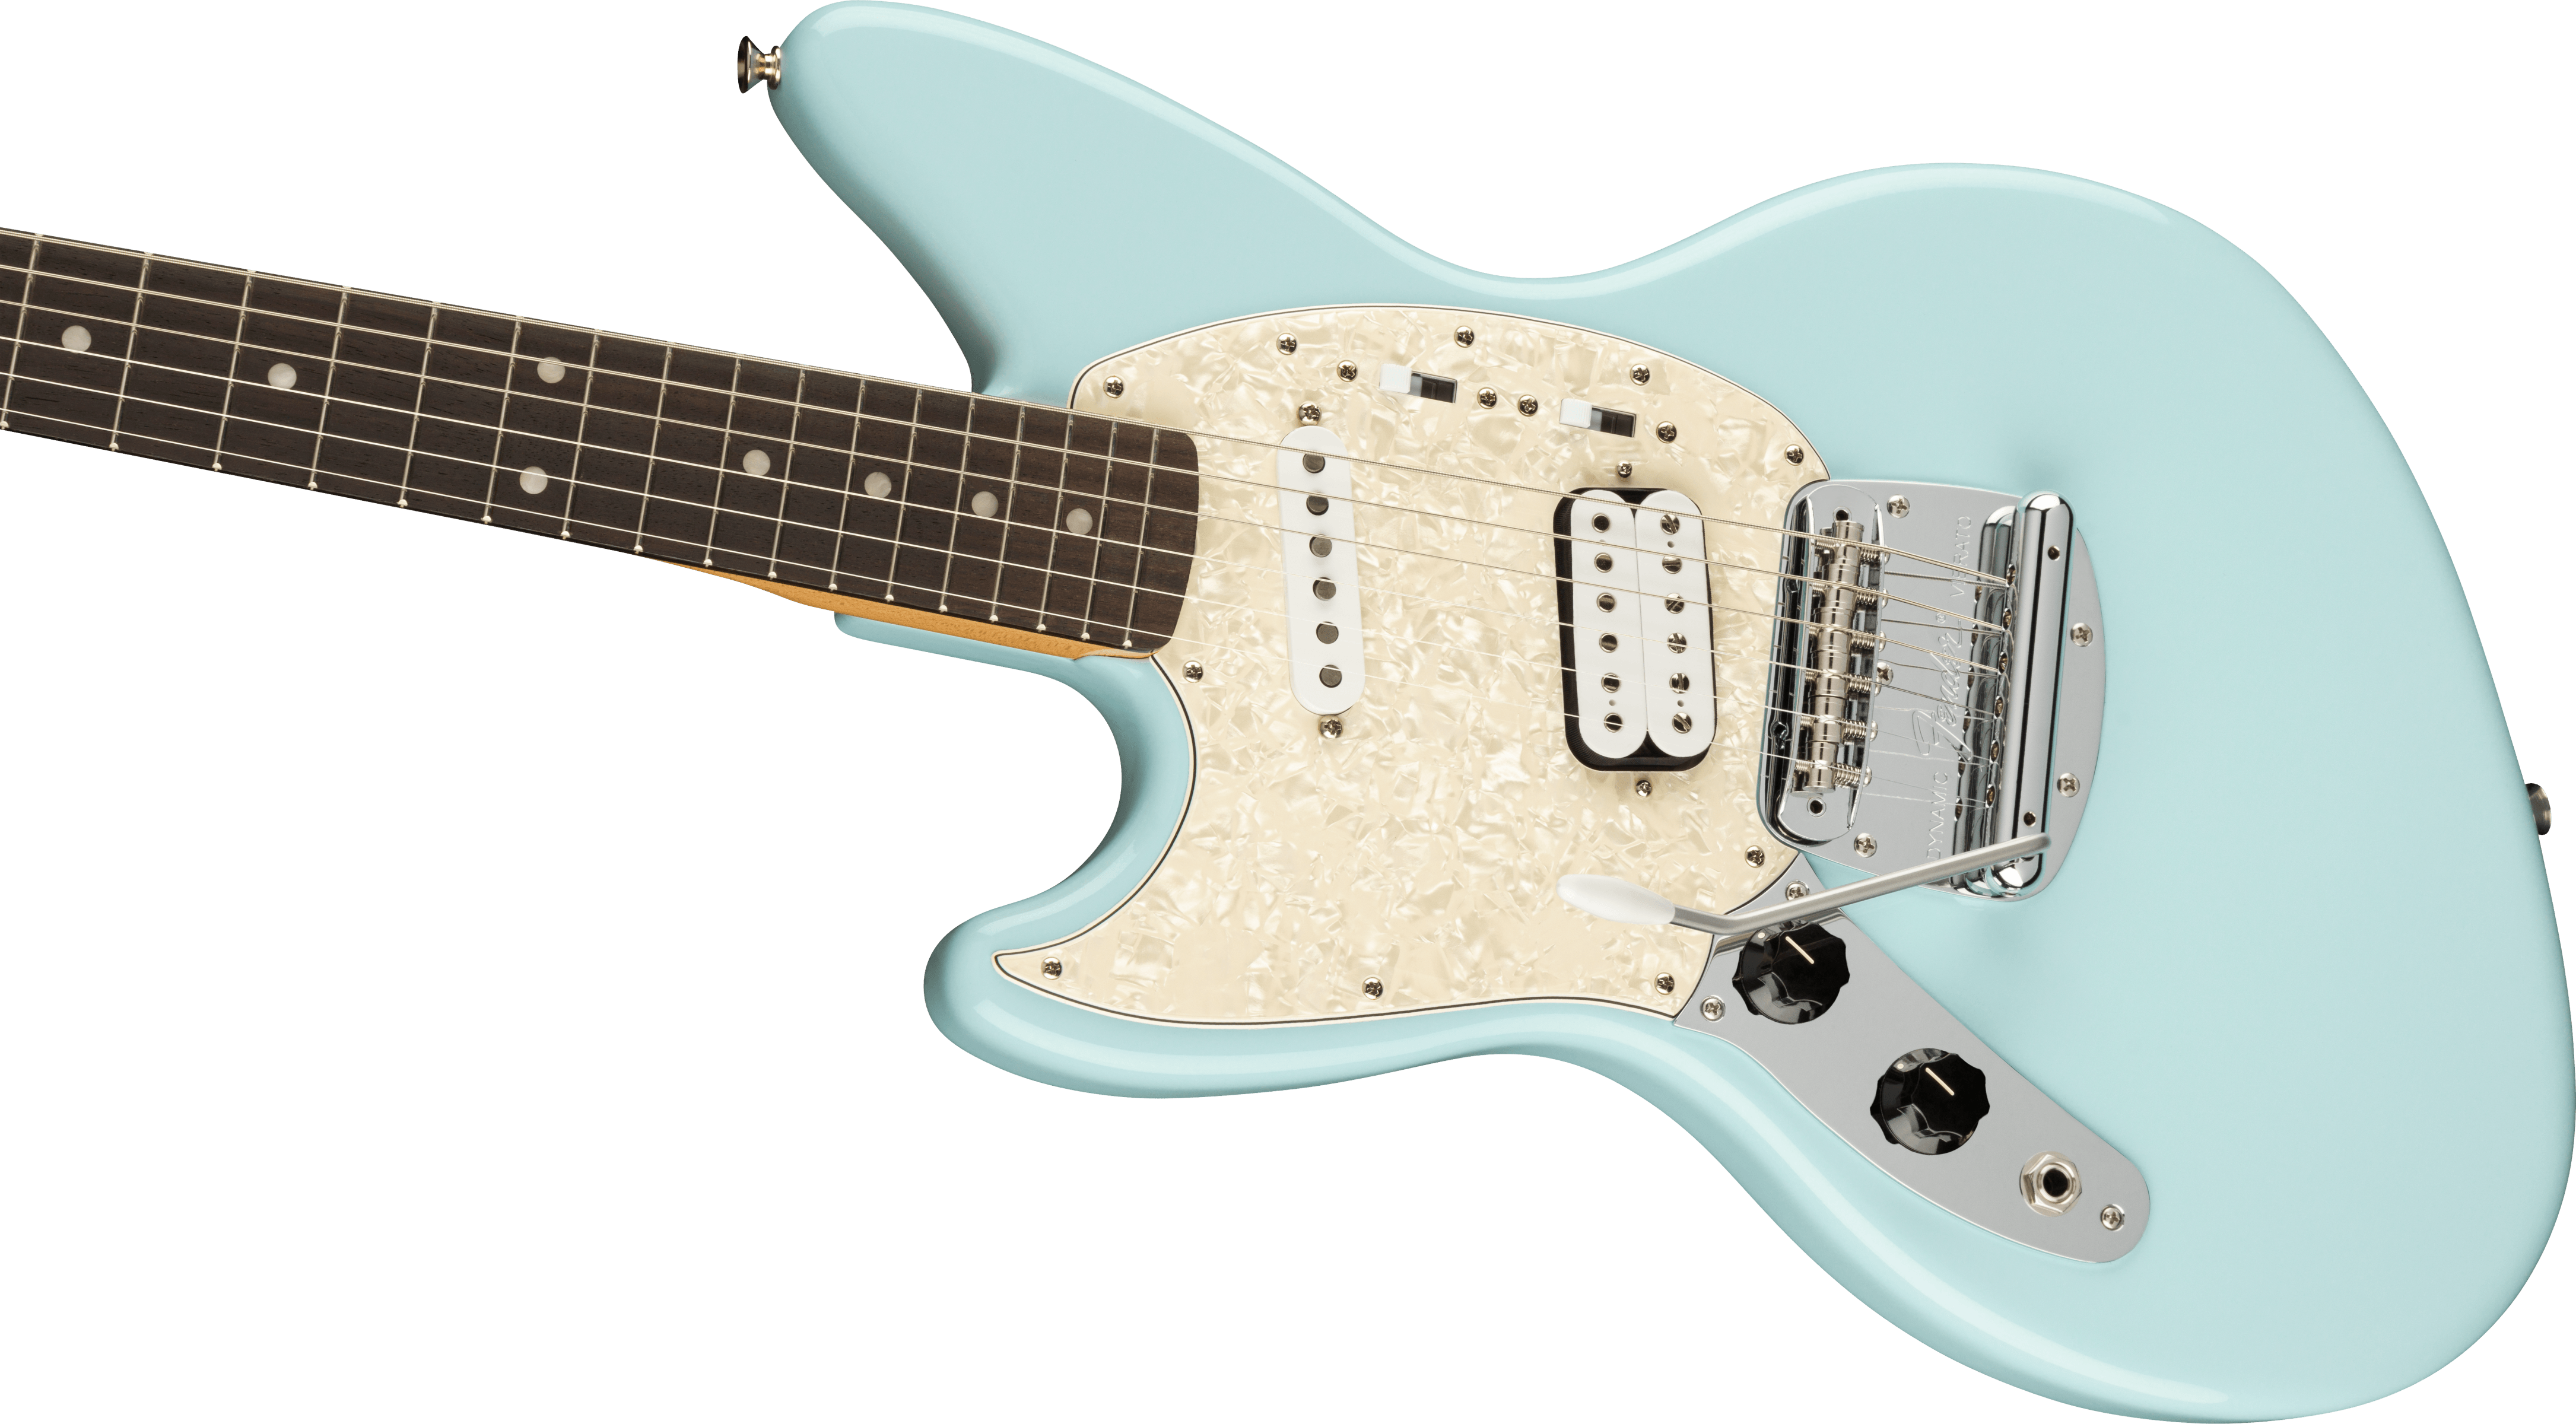 Fender Jag-stang Kurt Cobain Artist Gaucher Hs Trem Rw - Sonic Blue - Guitarra electrica para zurdos - Variation 3